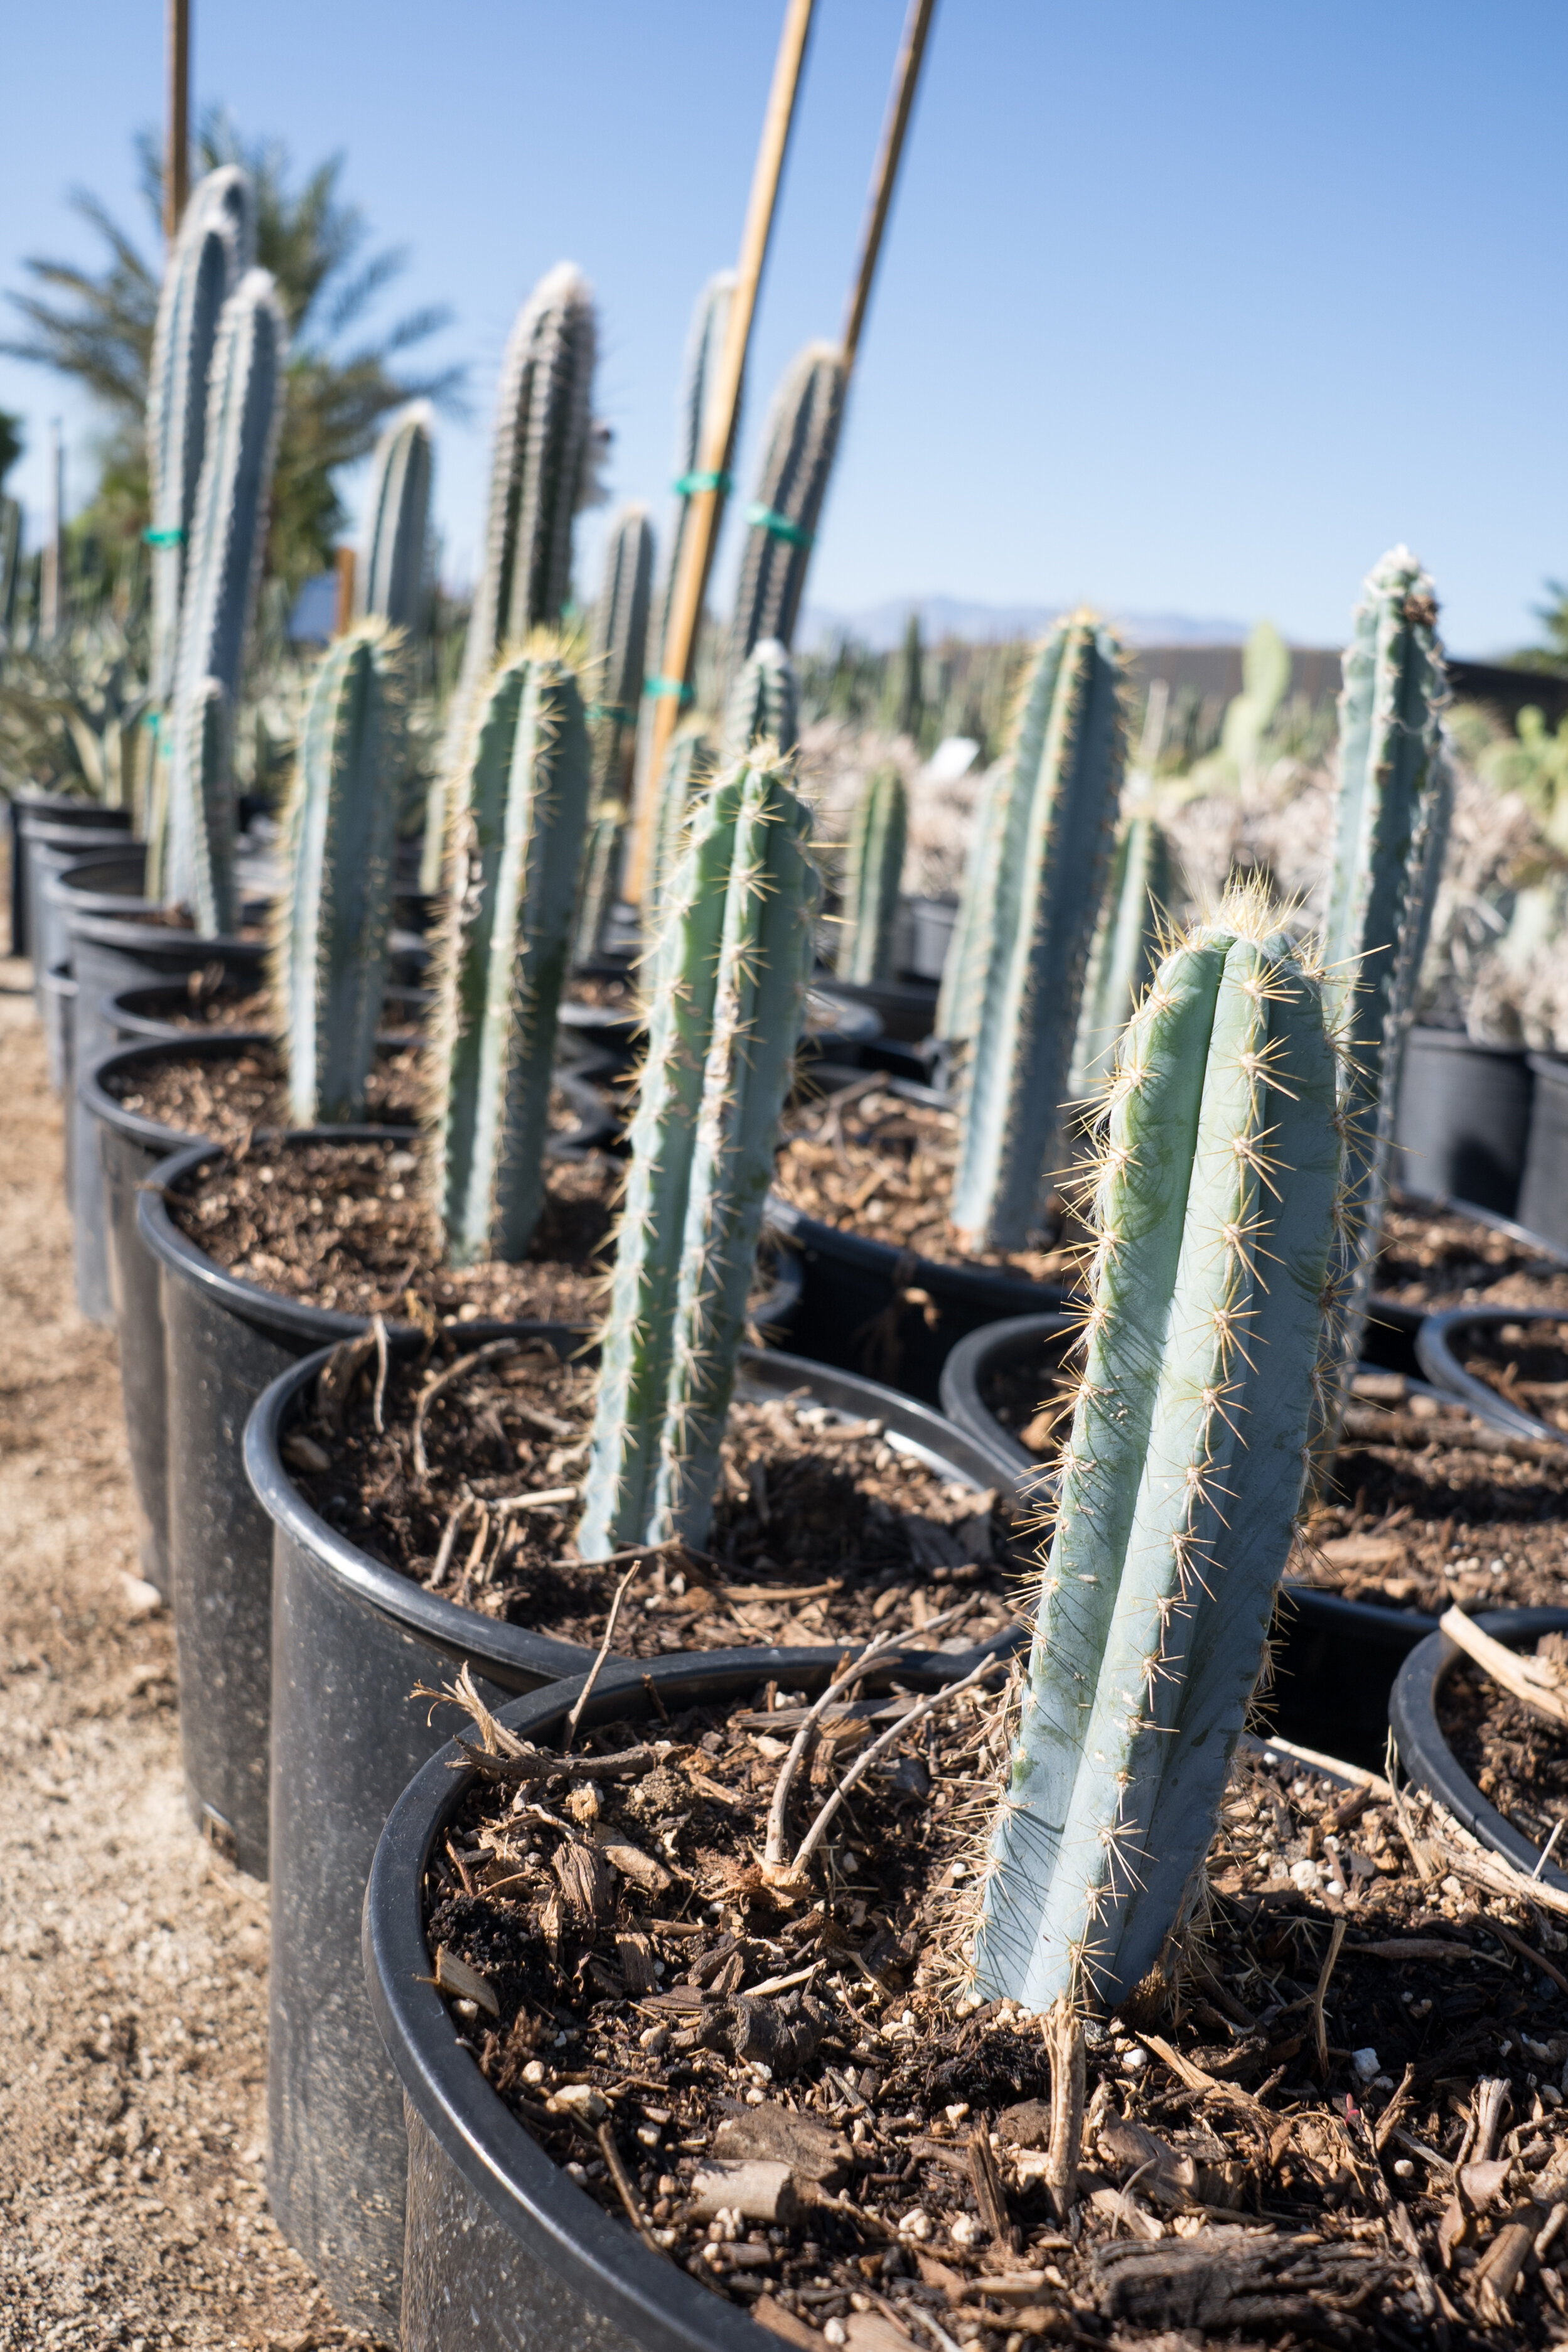 Blue Torch Cactus in 5 gallon pots